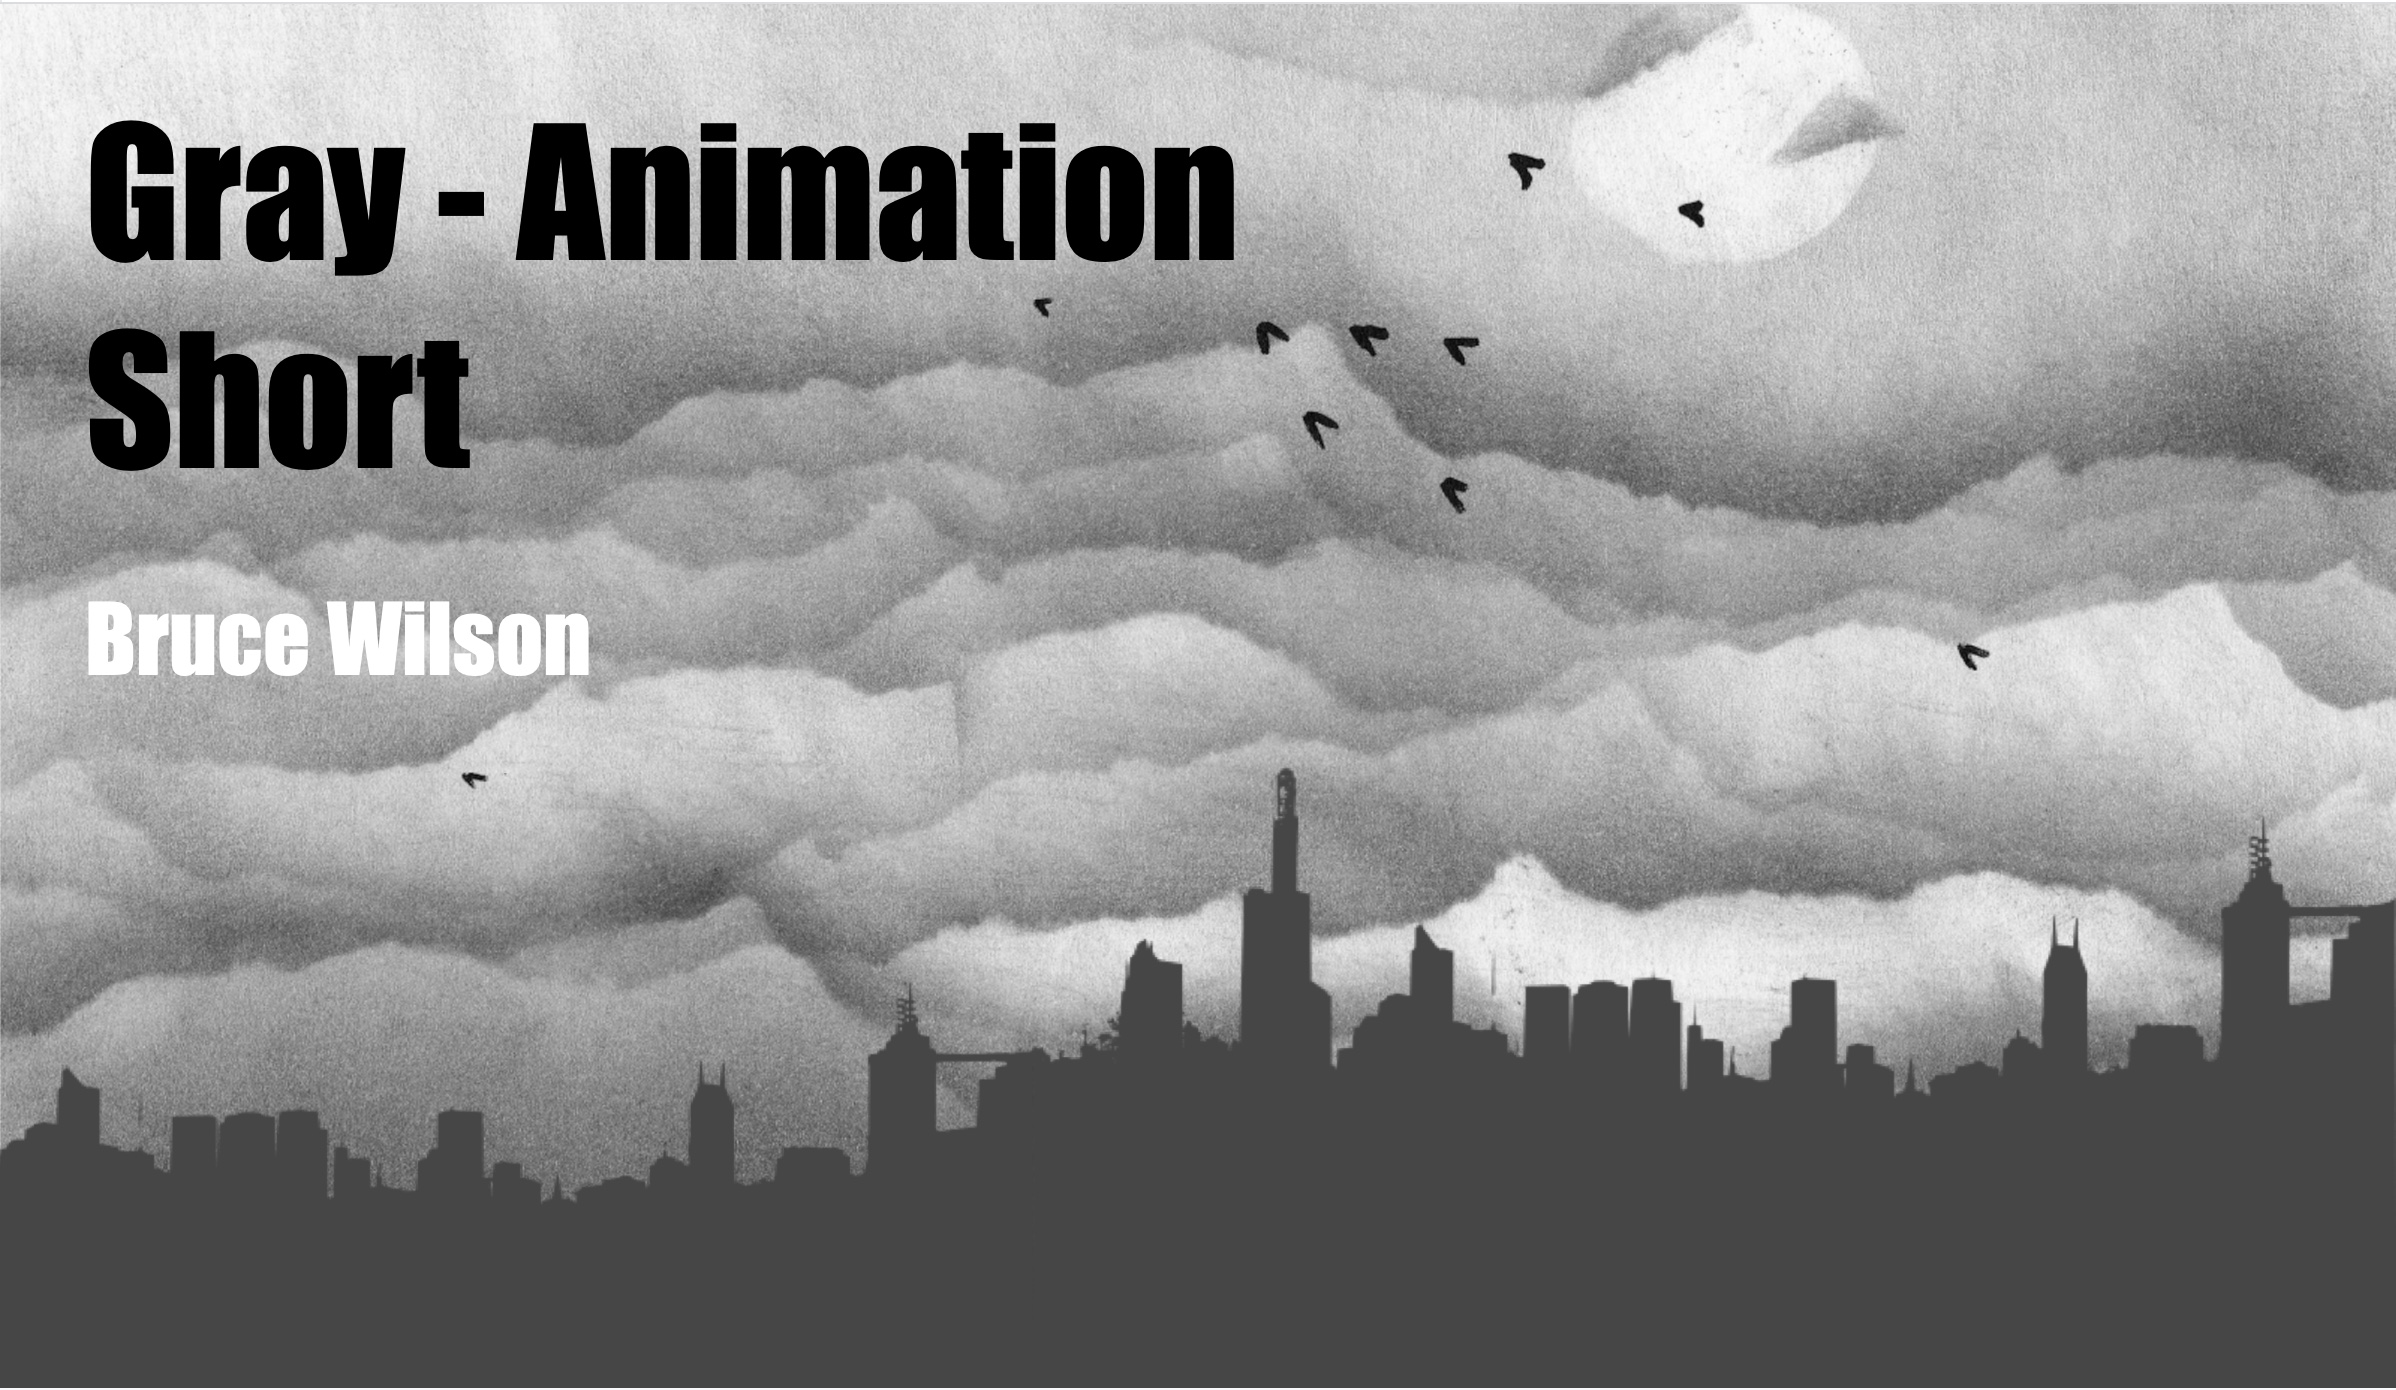 animated short title